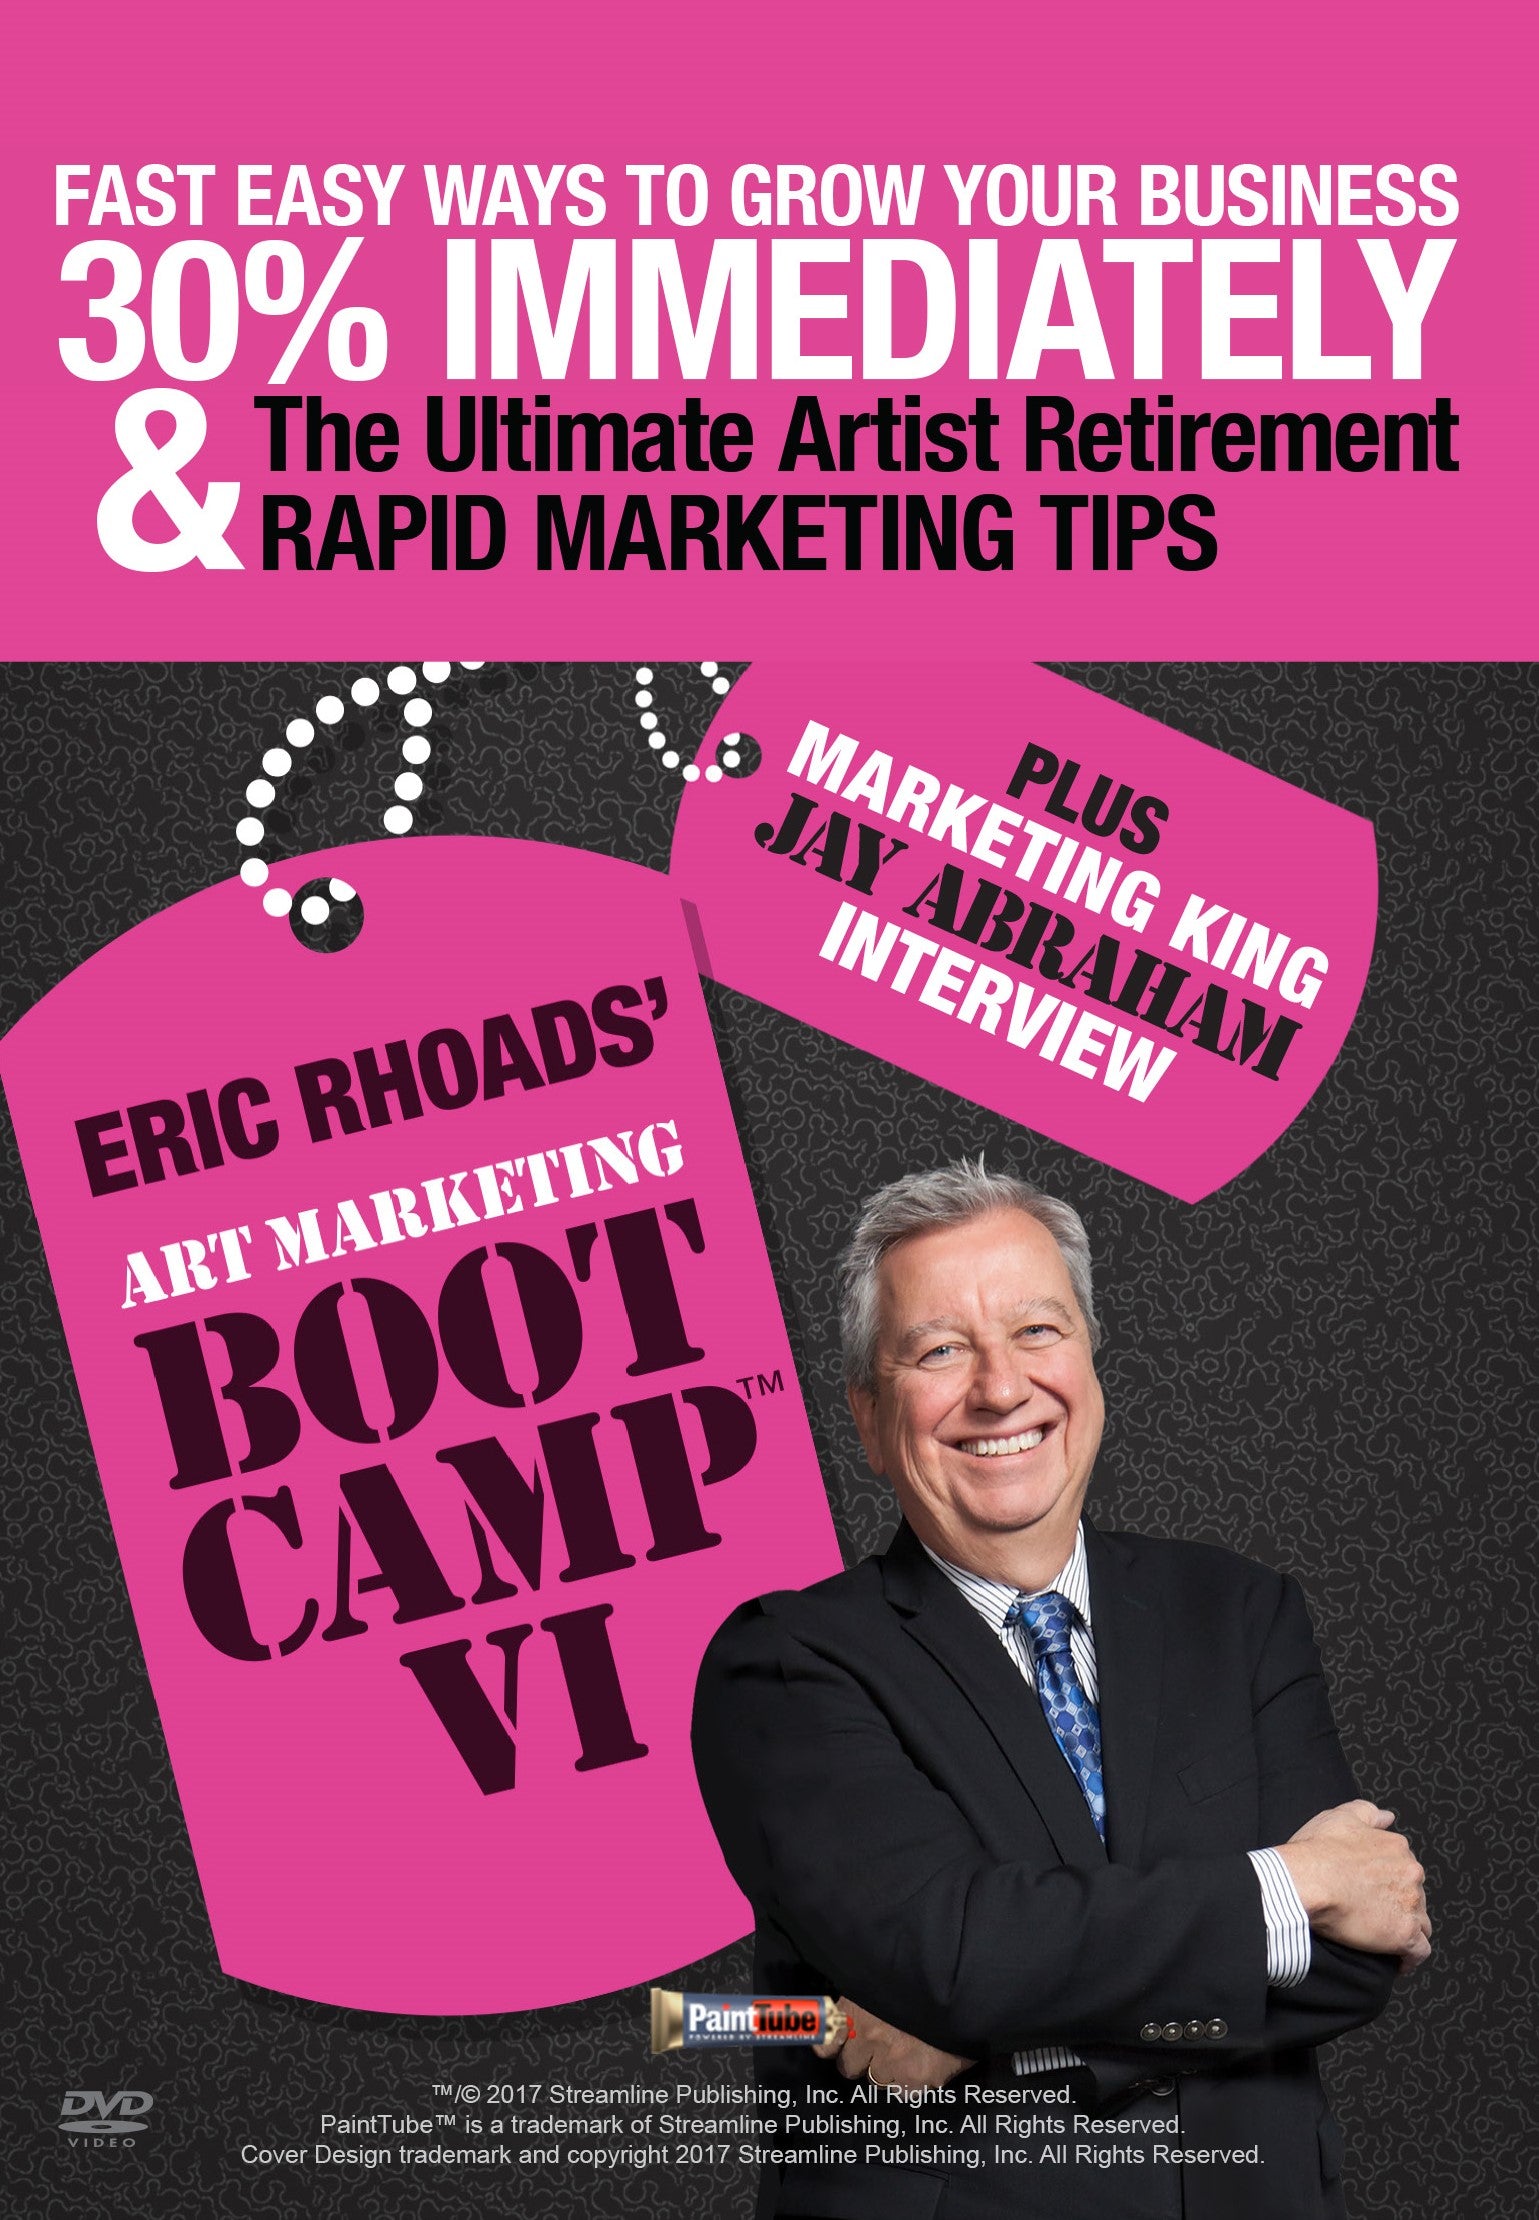 Eric Rhoads' Art Marketing Boot Camp VI